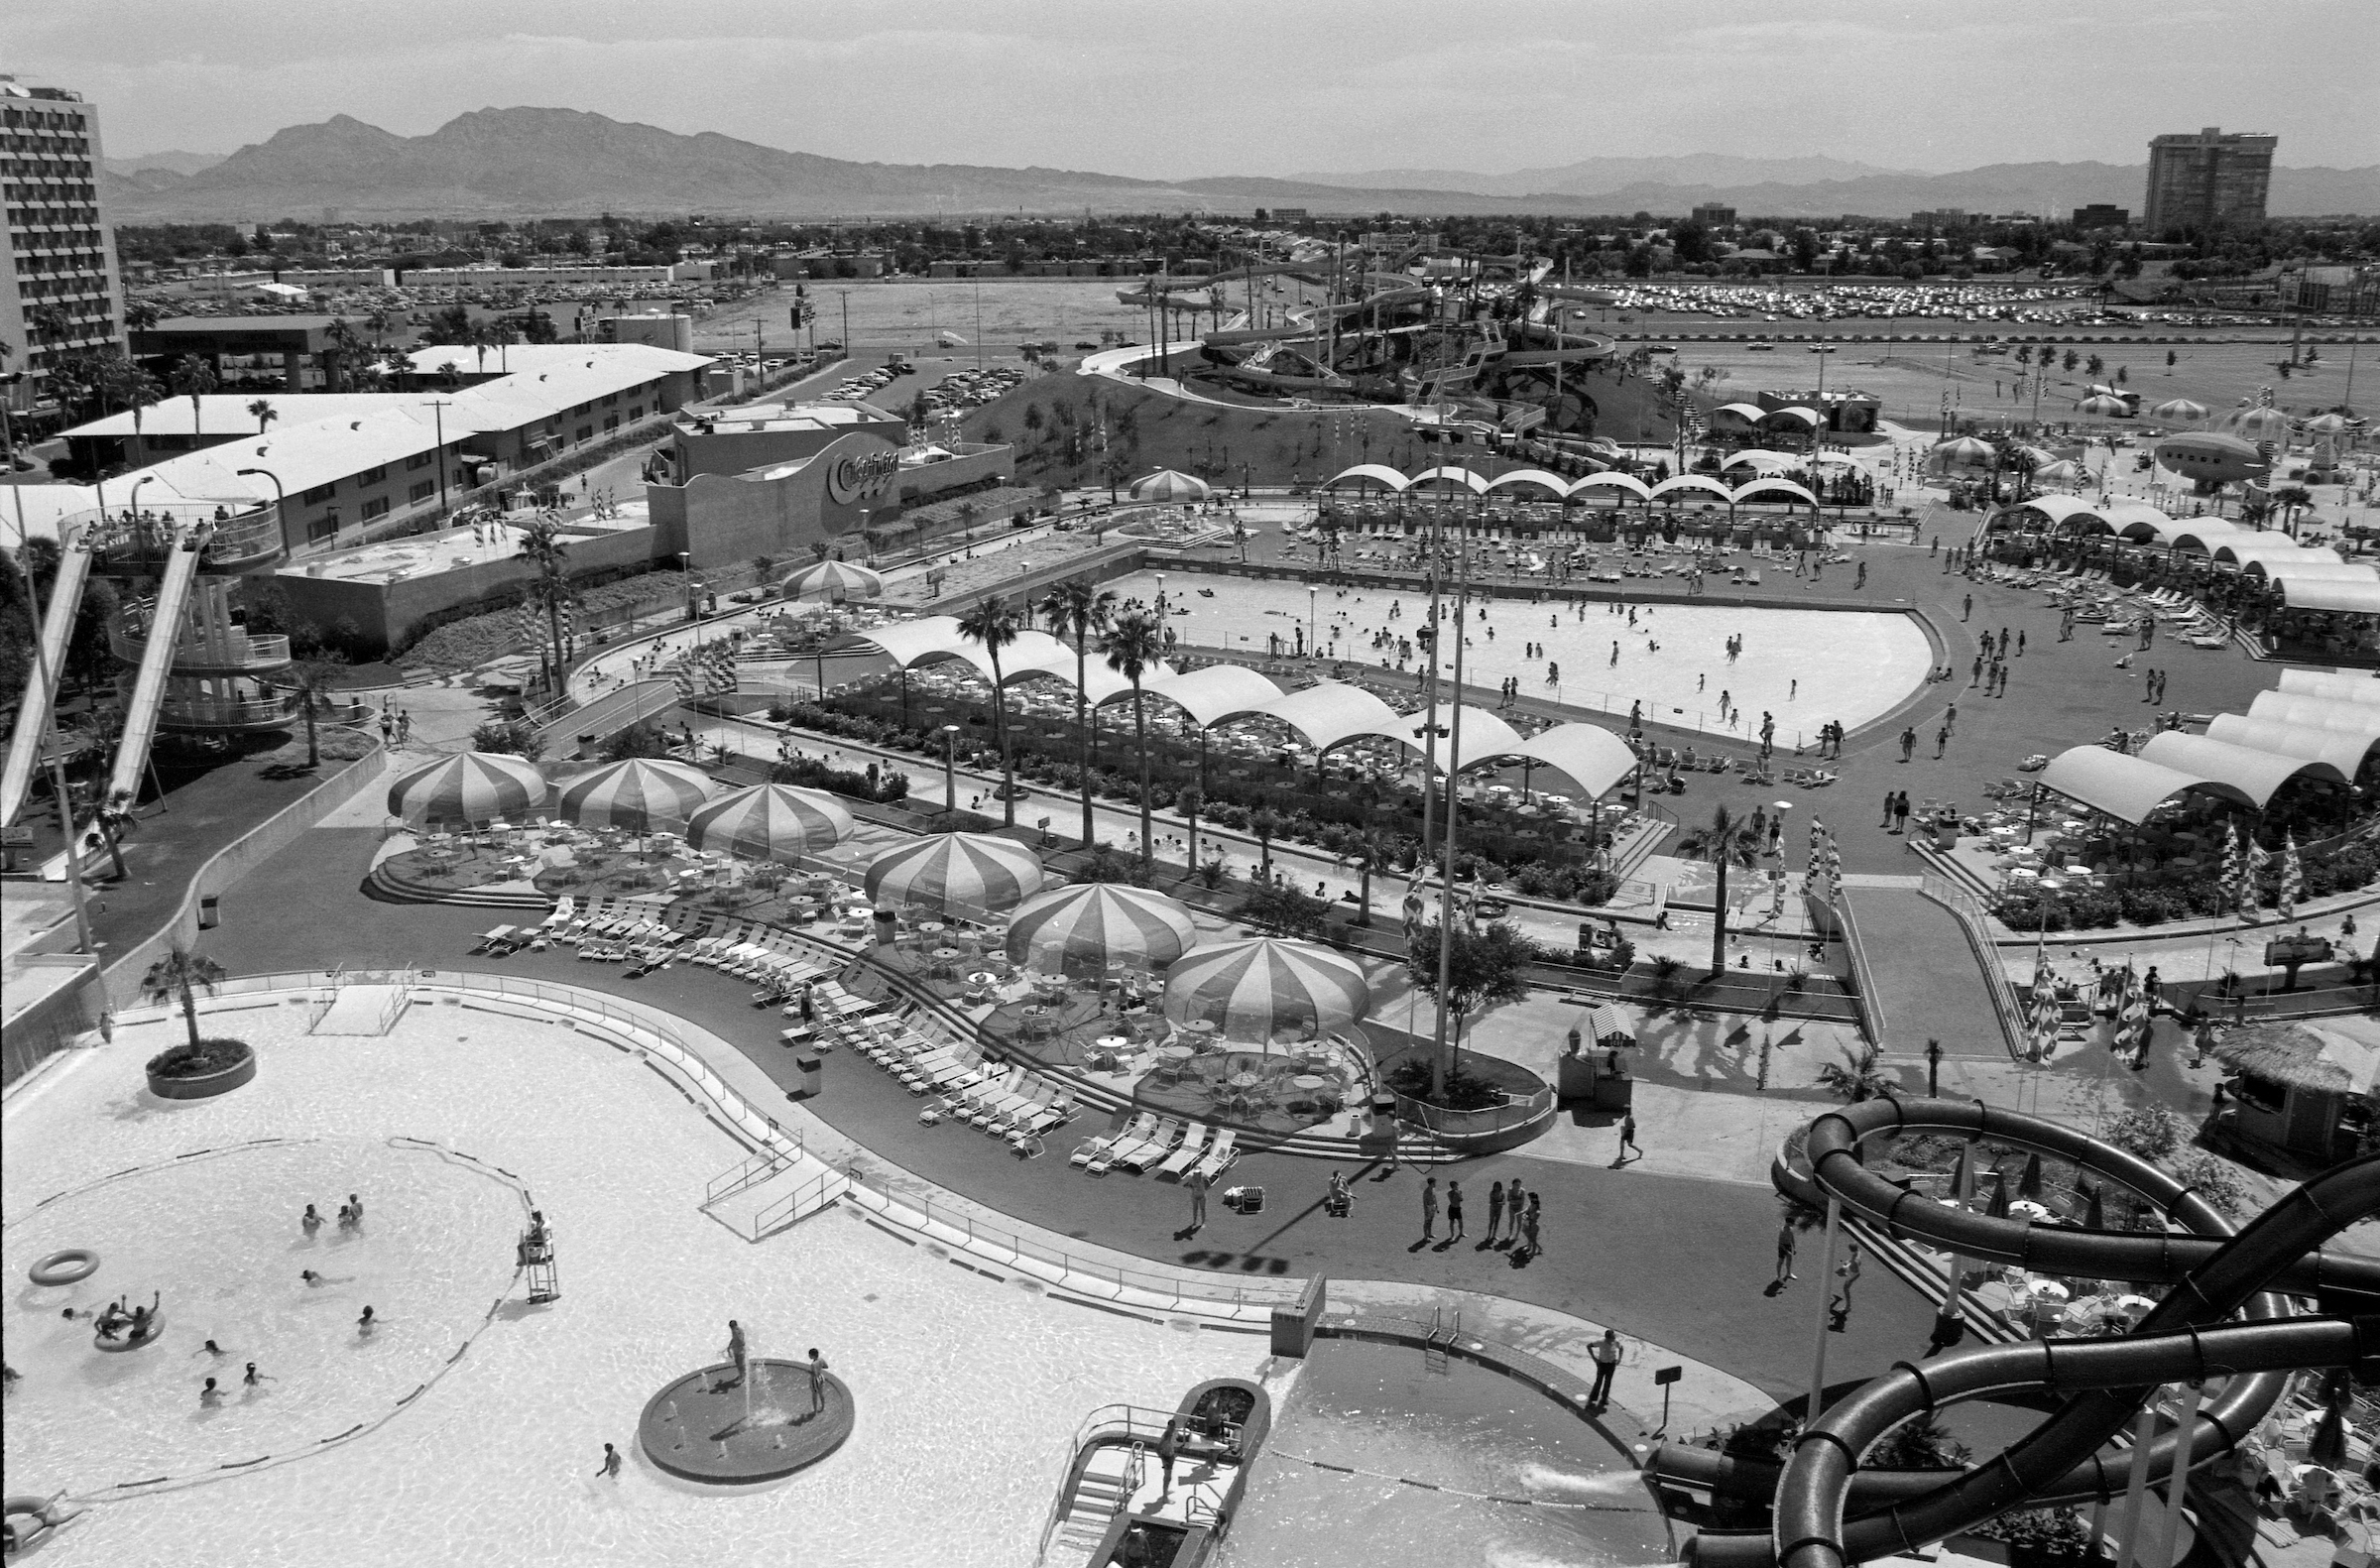 PHOTOS: Take a look back at the original Wet 'n Wild on Las Vegas